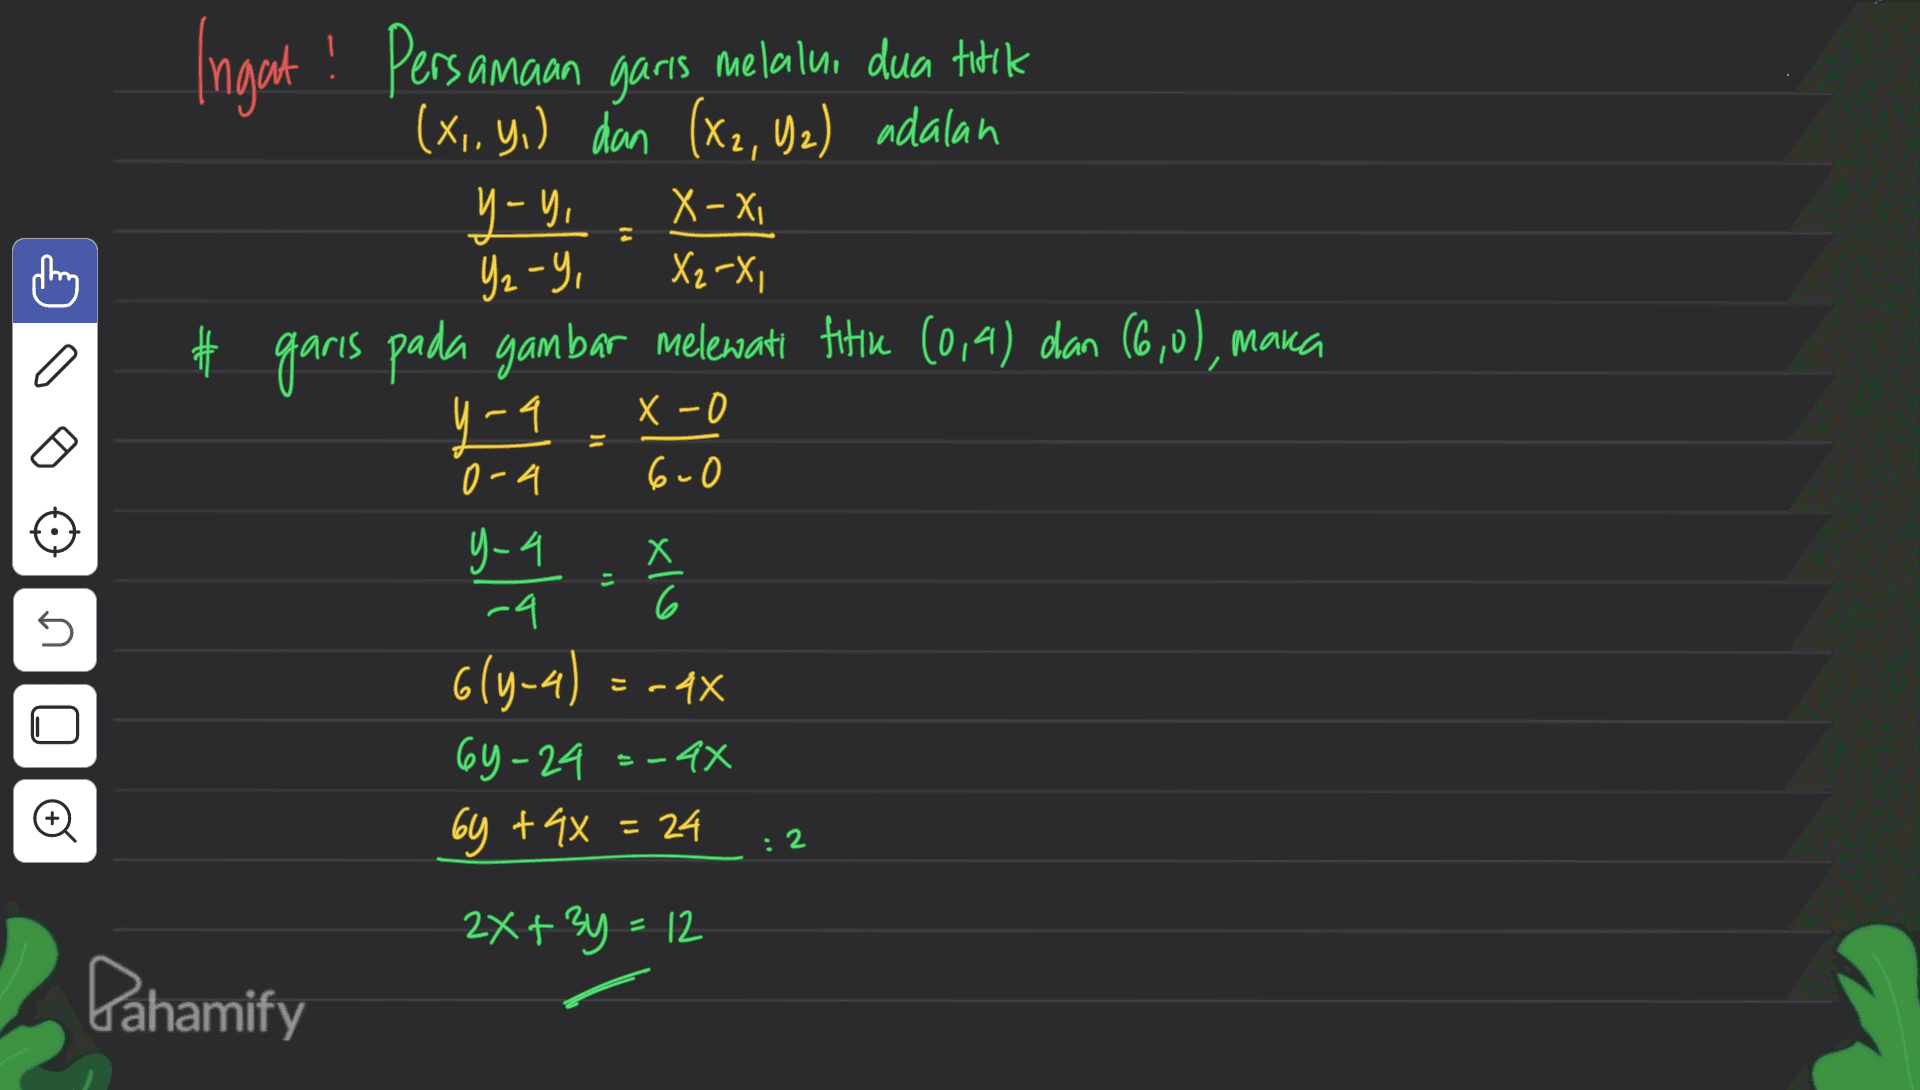 a Ingat Persamaan garis melalui dua titik (x,.yi) dan (x2, 12) adalan y-y, X-XI Yz-Y, X₂-X, # garis pada gambar melewati titik (0,4) dan (6,0), marca -4 X-0 0-4 6.0 y_4 -4 6 6ly-4) E-4X 64-24 =-4x 69 +9x = 24 - xlu 5 : 2 2X+ 3y = 12 Pahamify 